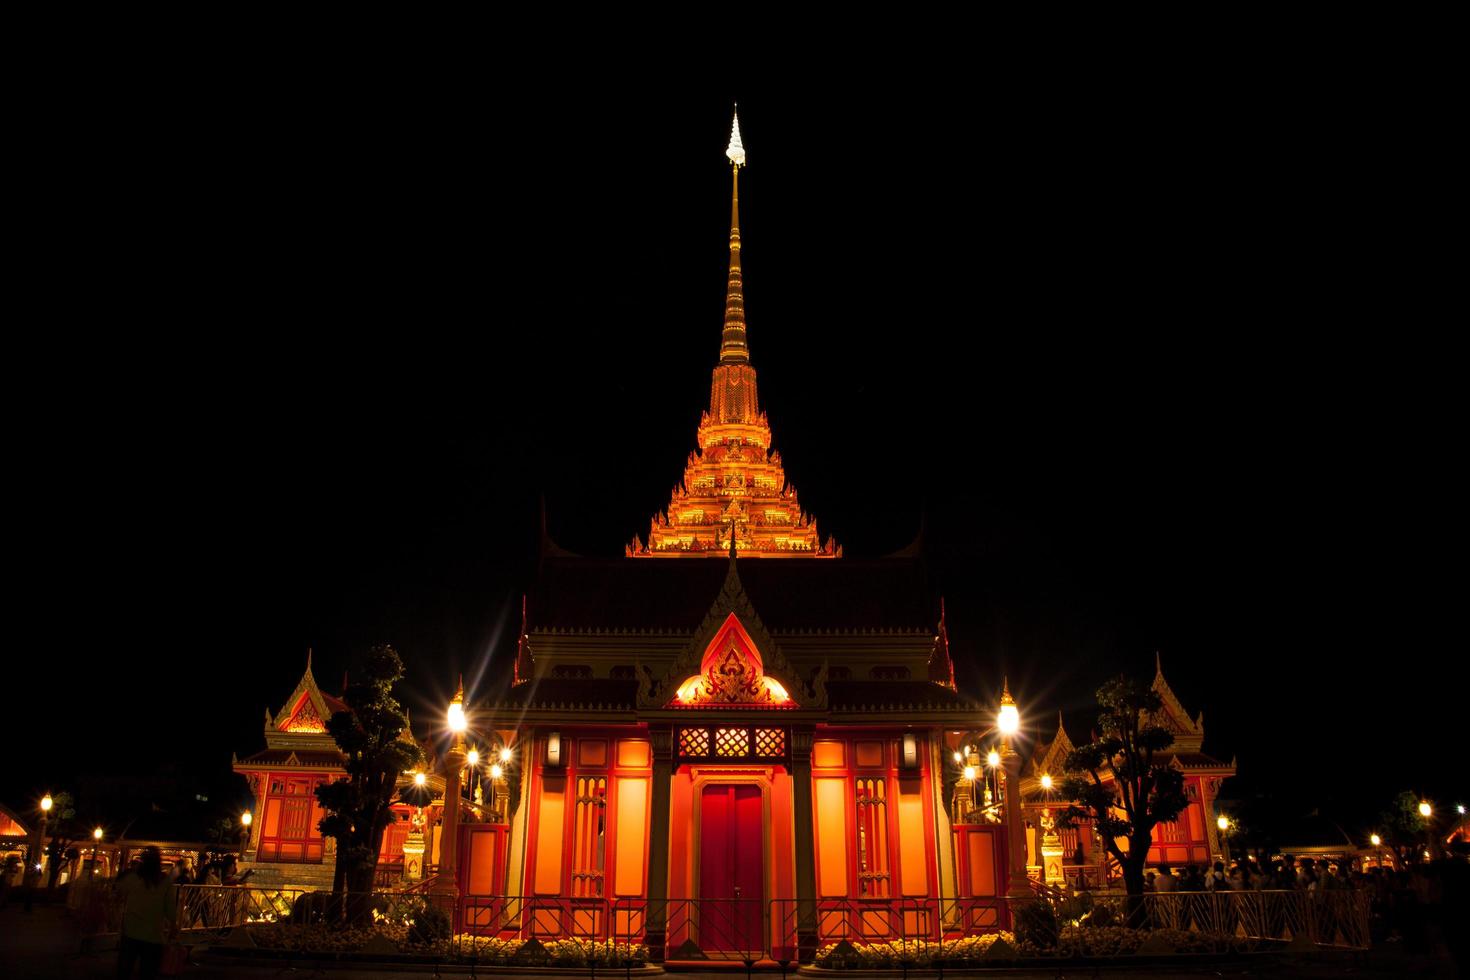 templo budista na tailândia foto